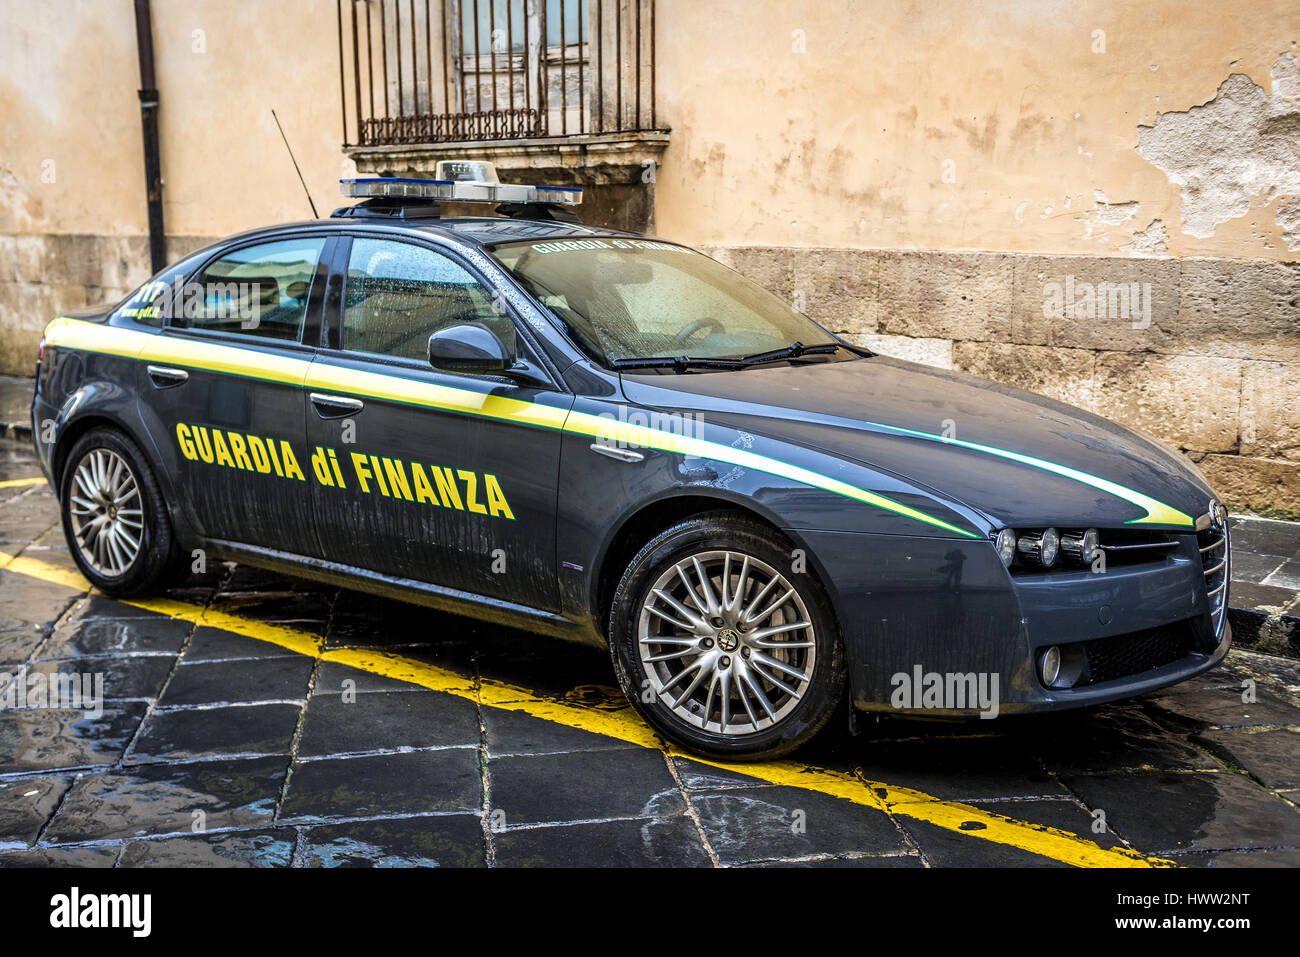 Alfa romeo italian police car hi-res stock photography and images - Alamy